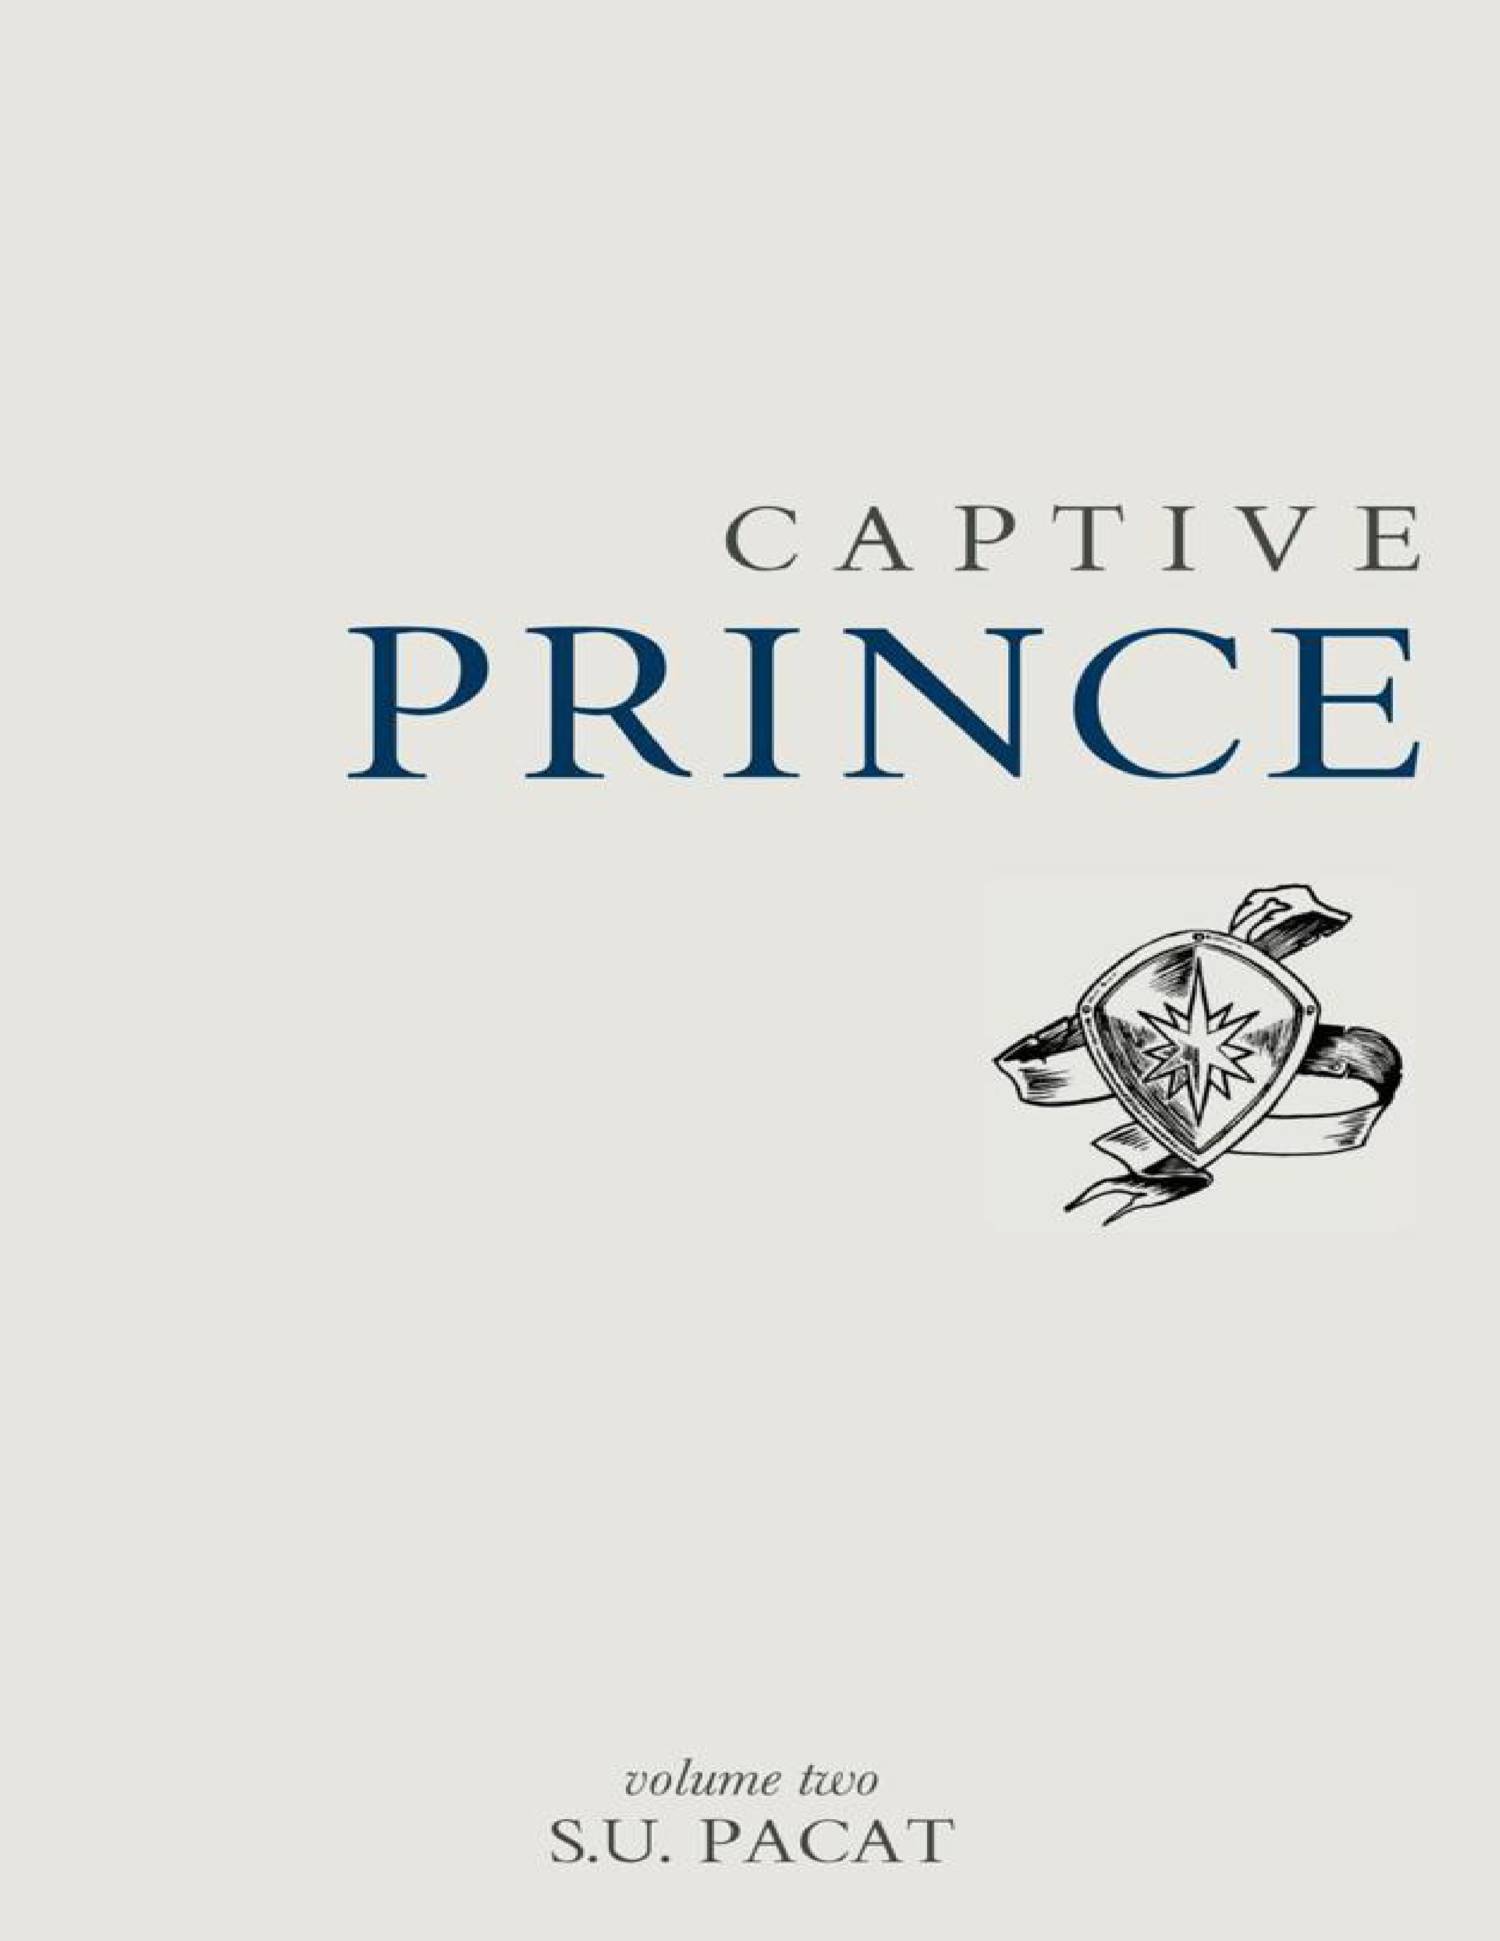 the captive prince book 3